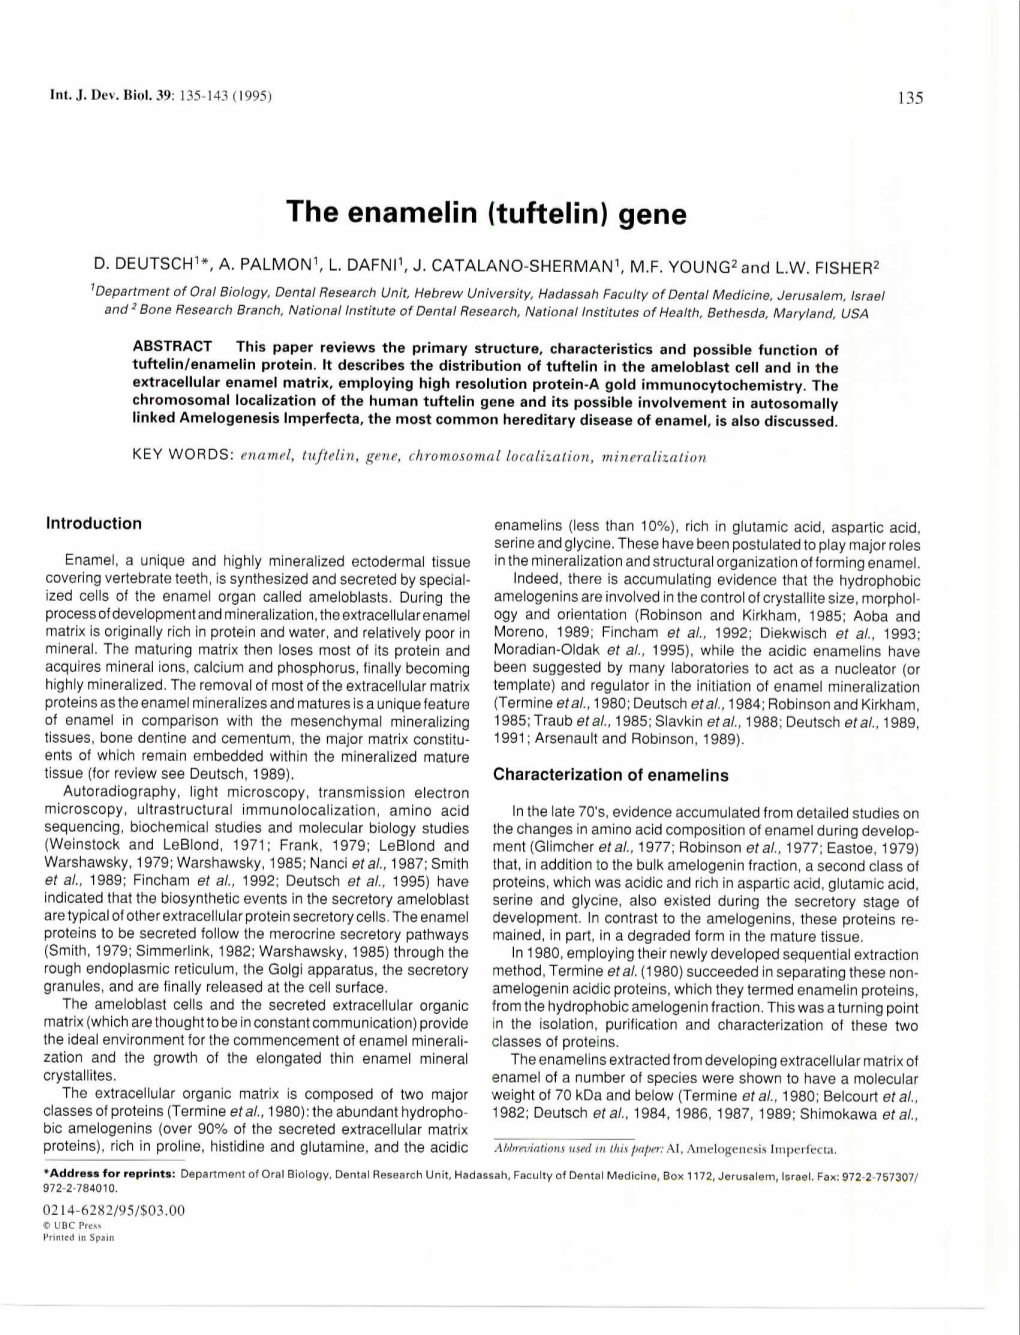 The Enamelin (Tuftelin) Gene